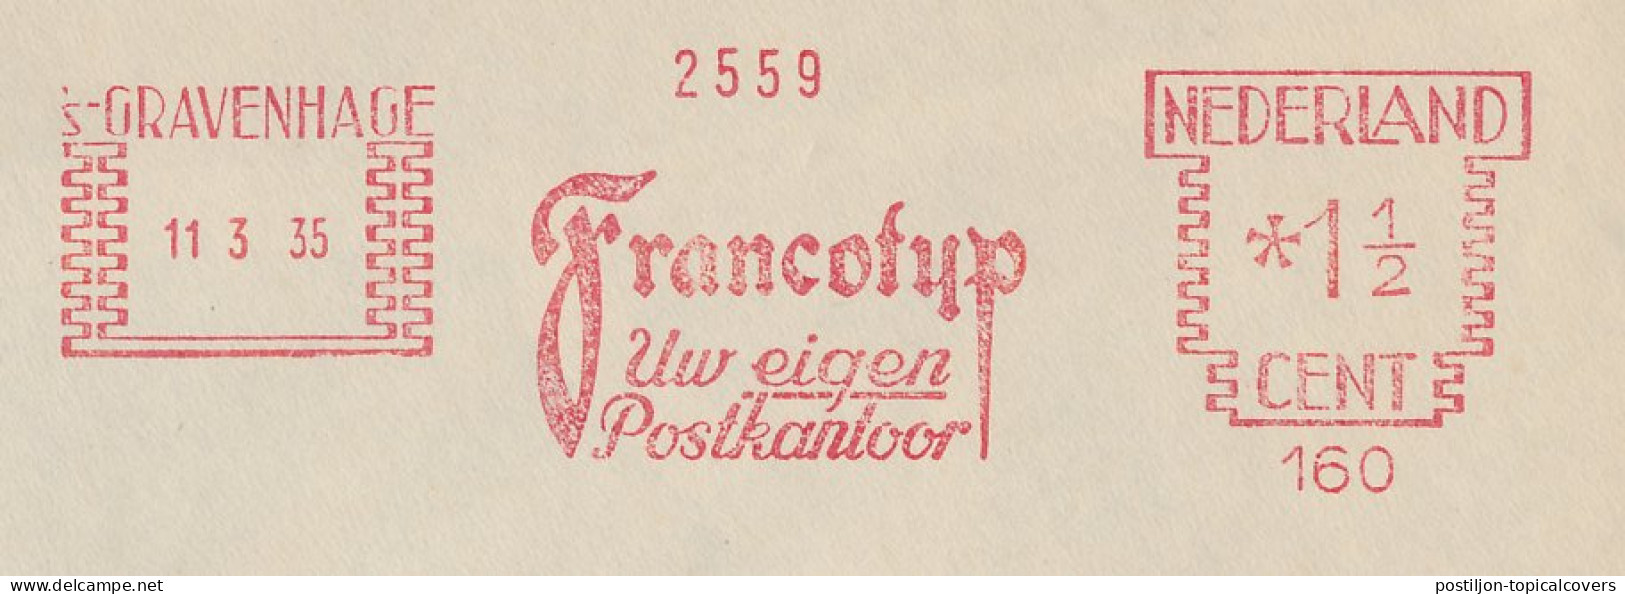 Meter Cover Netherlands 1935 Francotyp - The Hague - Automaatzegels [ATM]